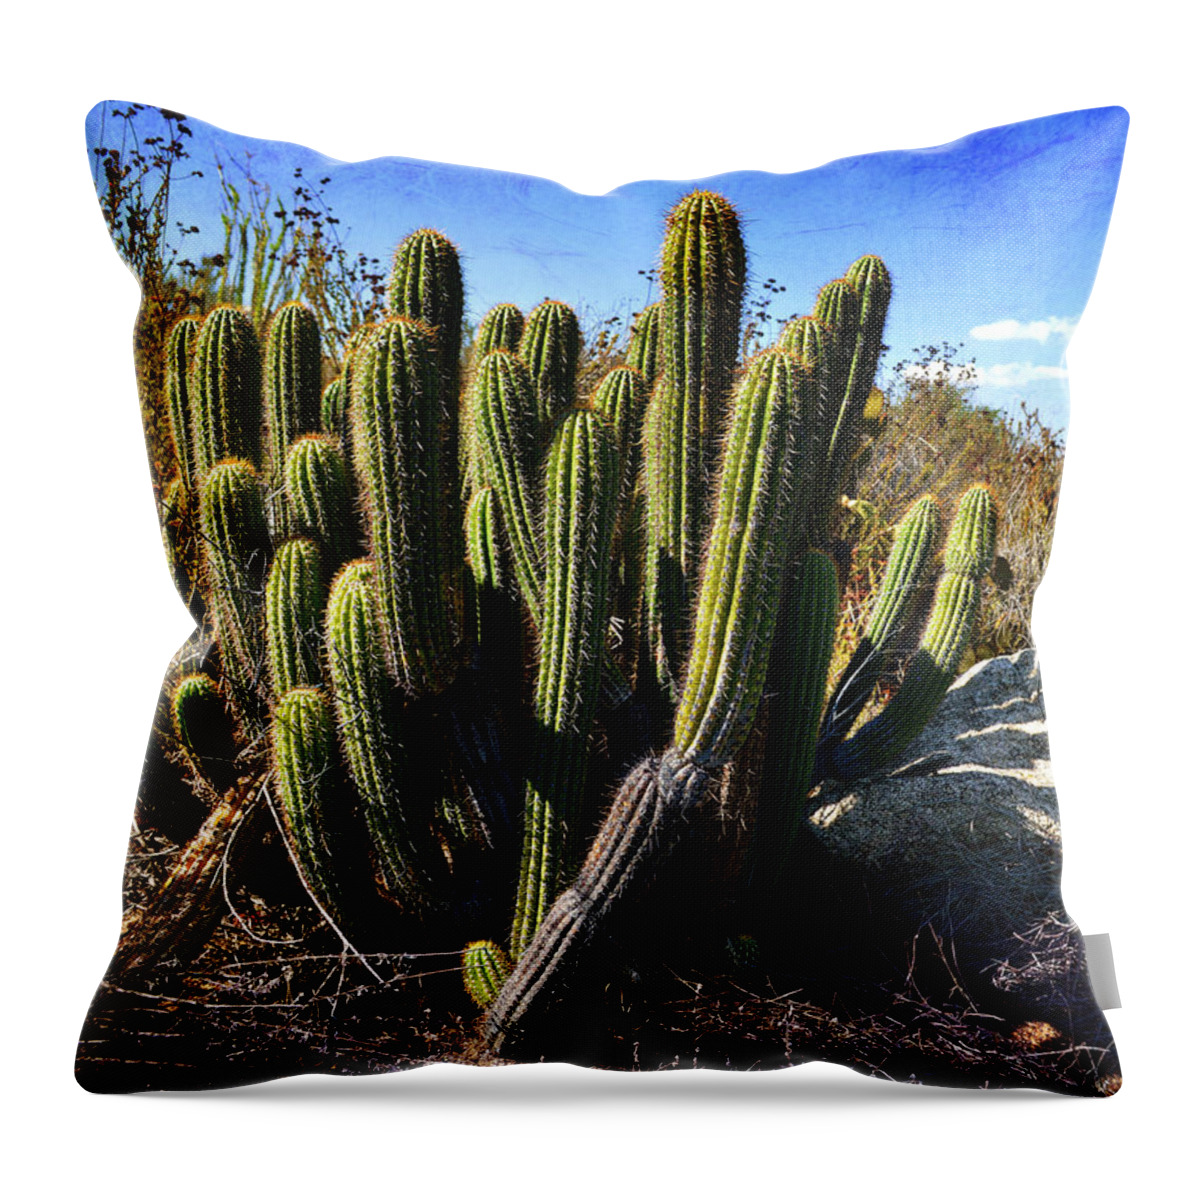 Glenn Mccarthy Throw Pillow featuring the photograph Desert Plants - The Wild Bunch by Glenn McCarthy Art and Photography